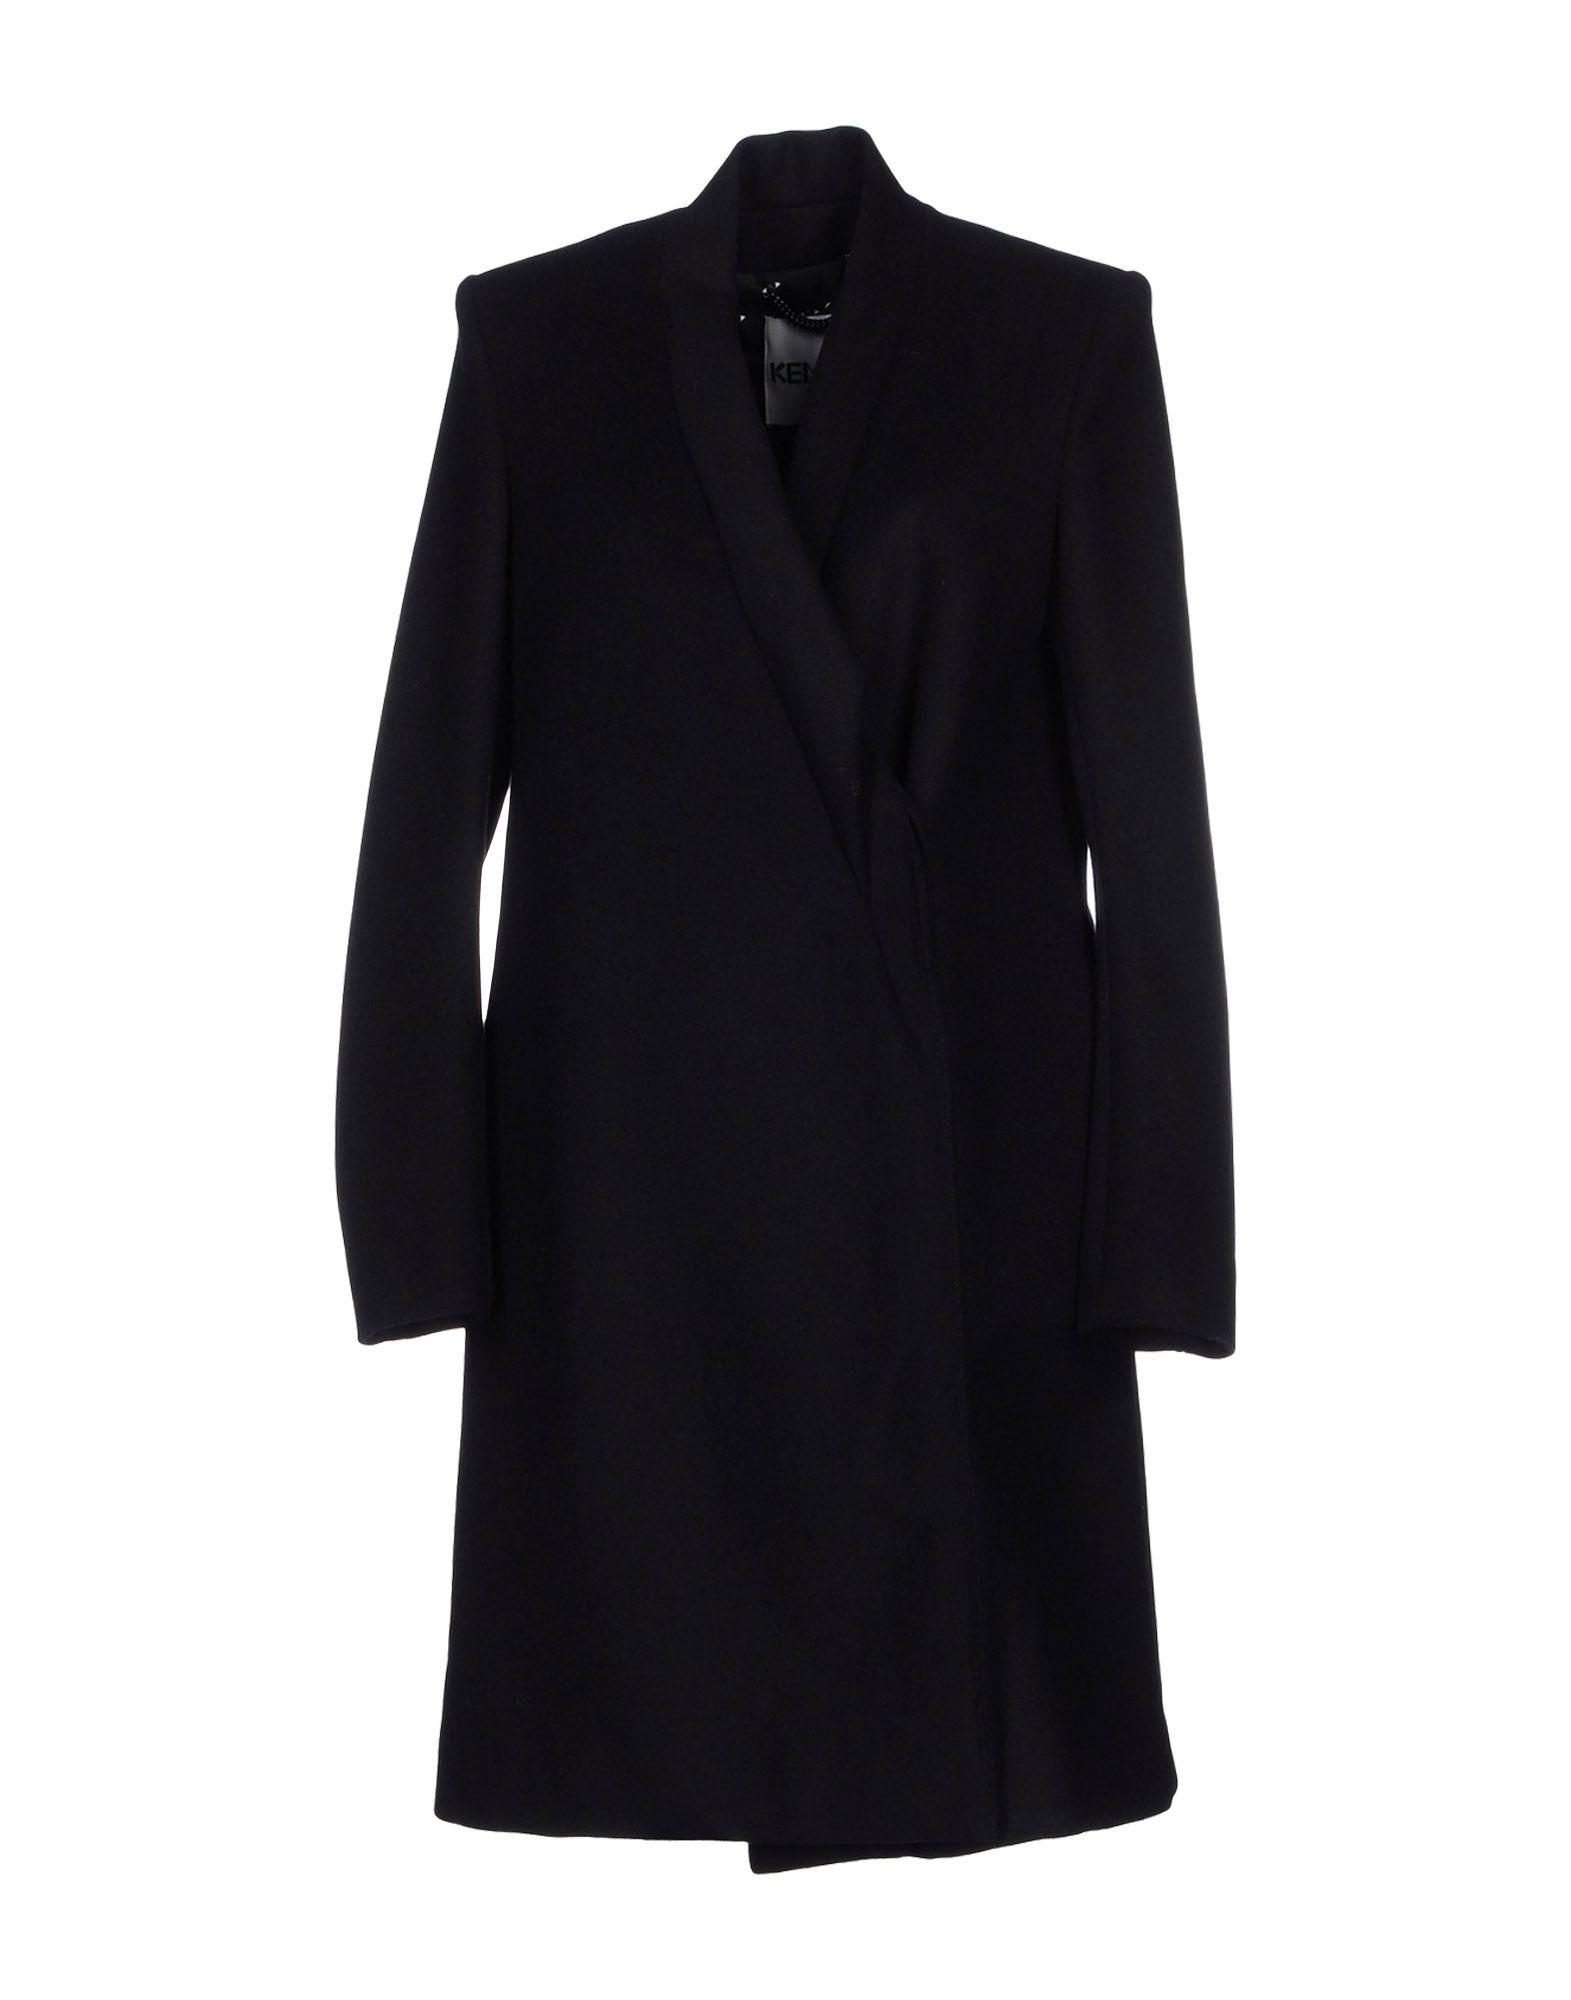 Lyst - Kenzo Coat in Black for Men